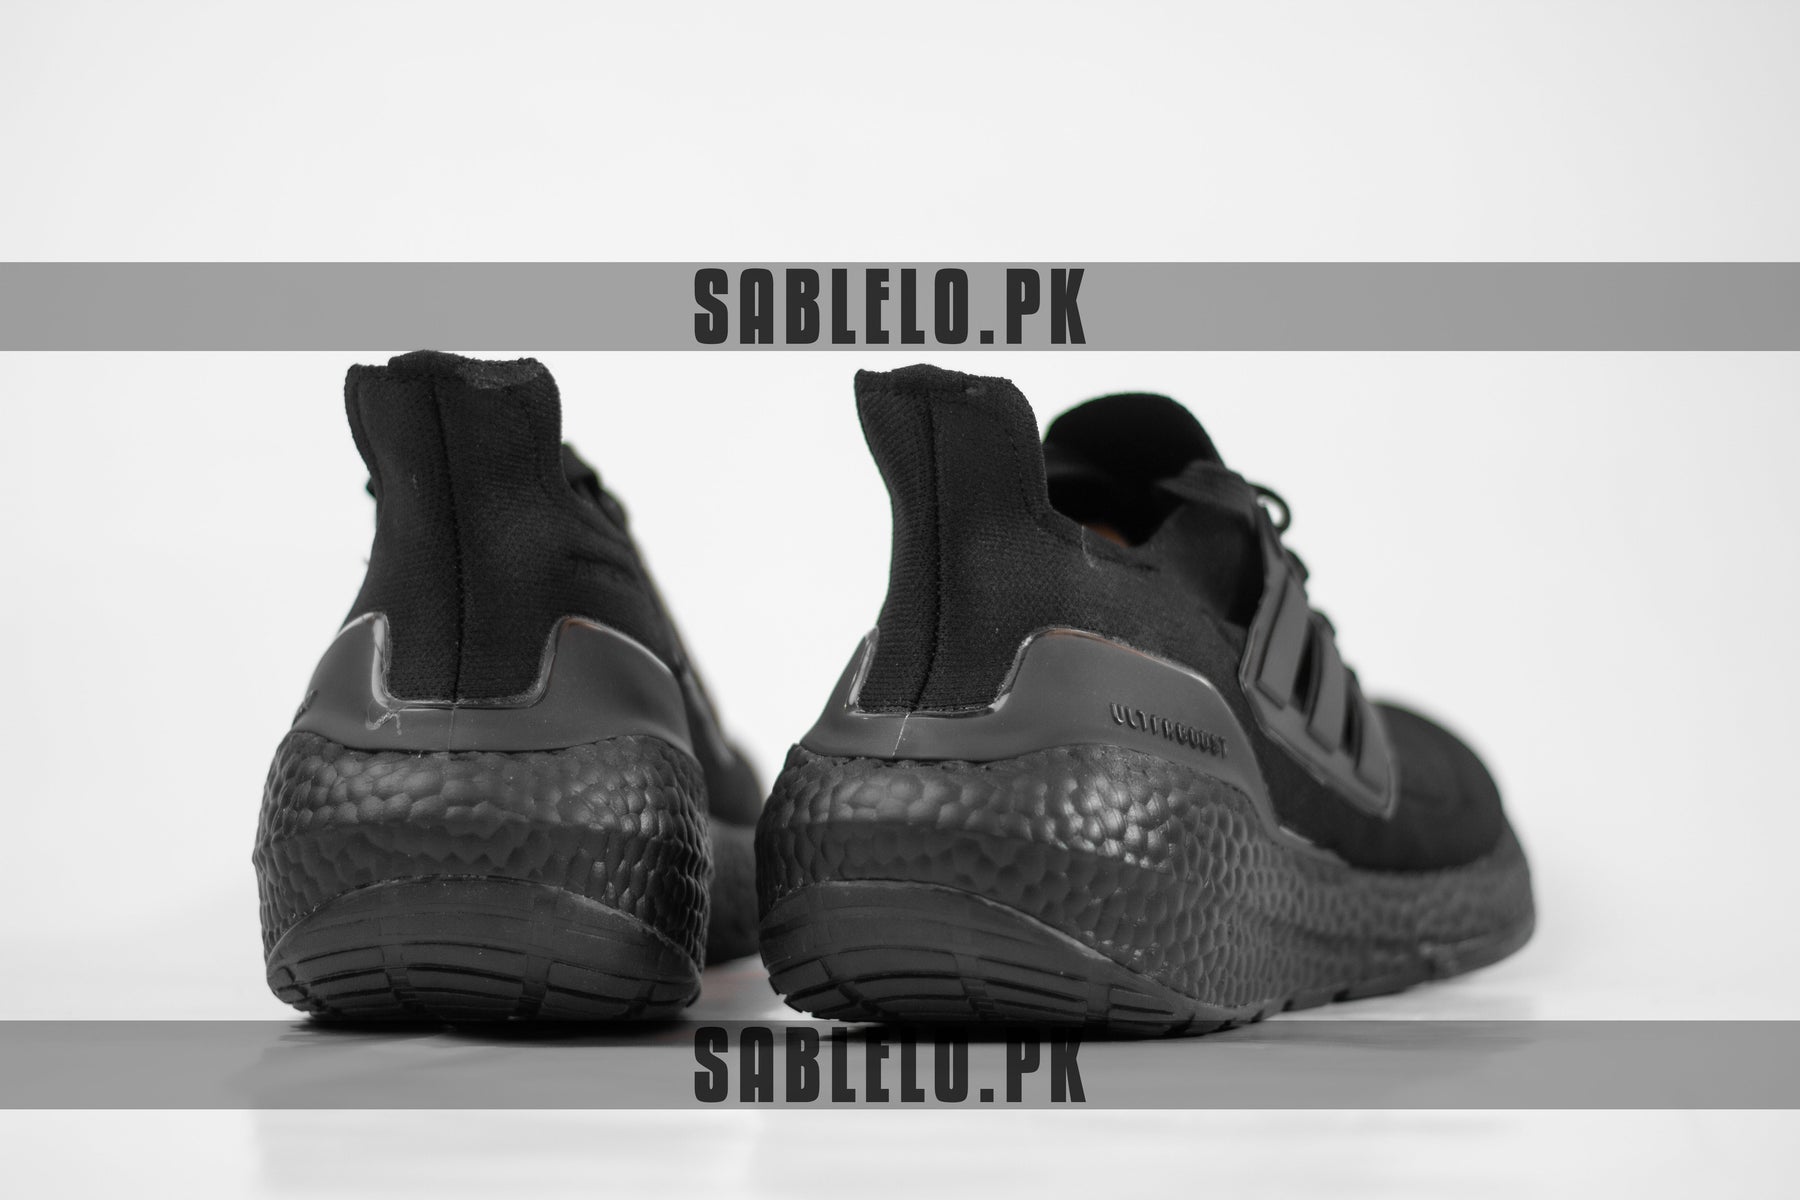 Adidas Ultraboost 21 Triple Black - Premium Shoes from Sablelo.pk - Just Rs.5999! Shop now at Sablelo.pk